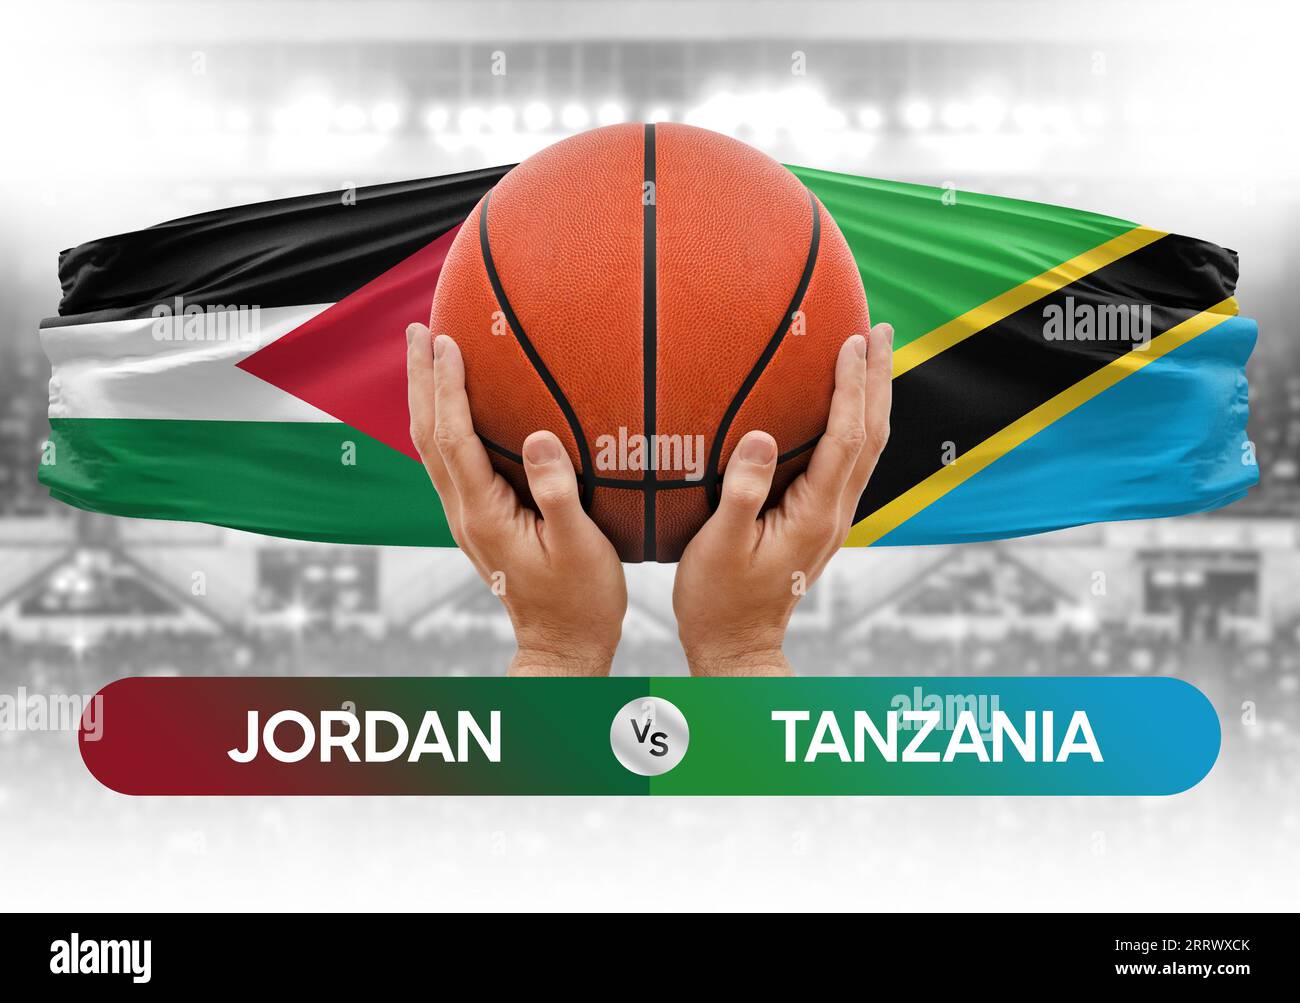 Jordan vs Tanzania national basketball teams basket ball match competition cup concept image Stock Photo